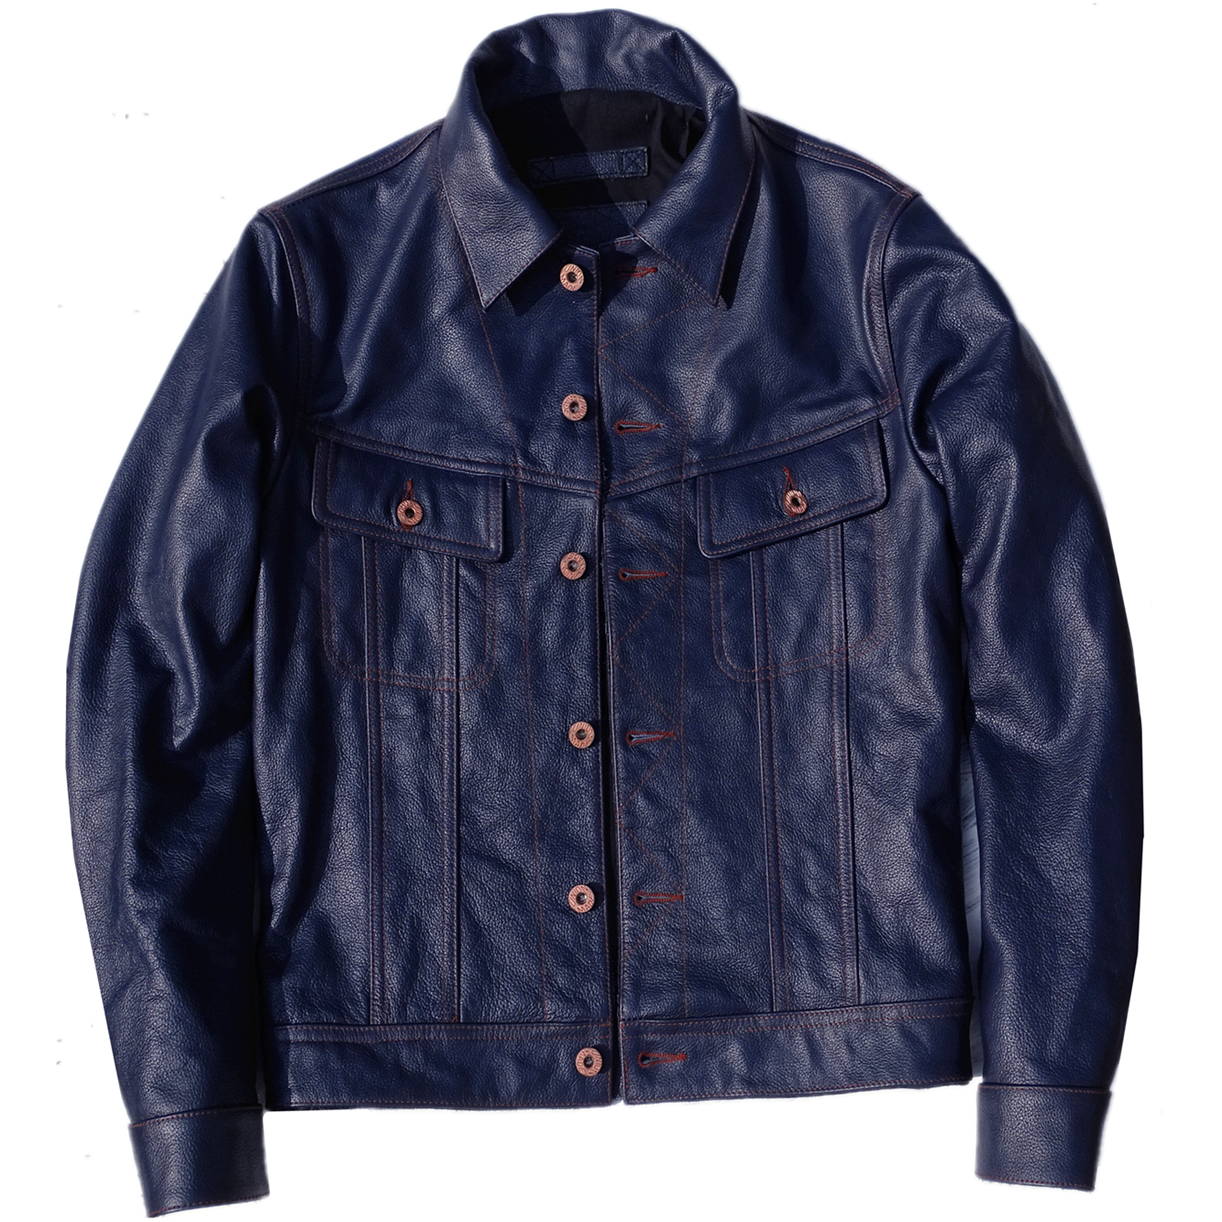 Blue Lychee Pattern Storm Knight Jacket Men's Leather